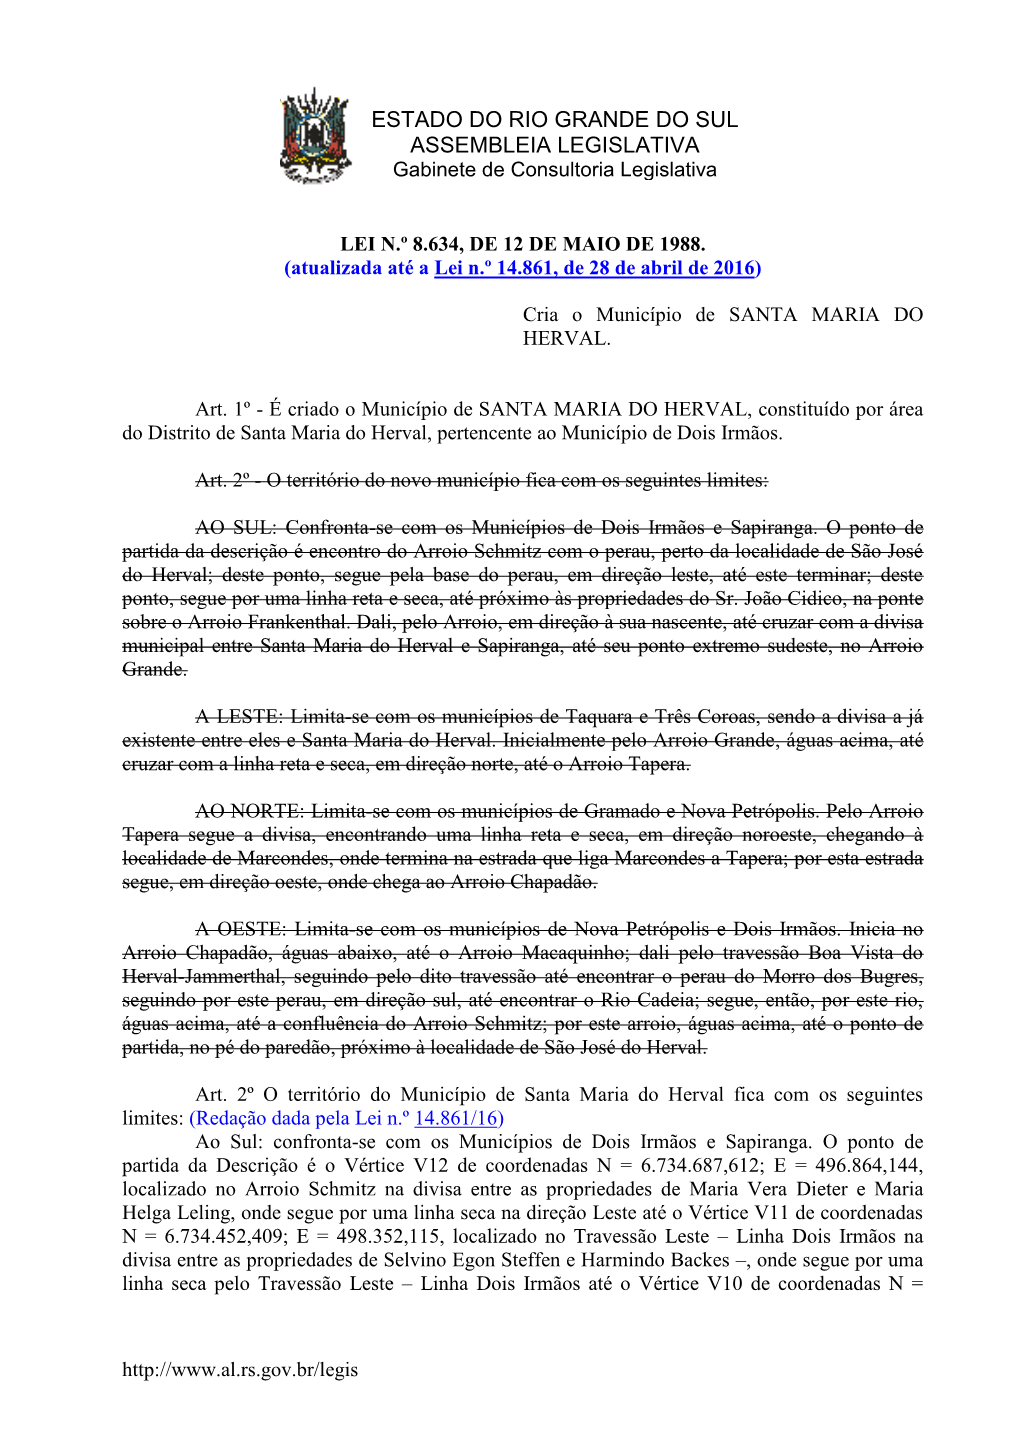 ESTADO DO RIO GRANDE DO SUL ASSEMBLEIA LEGISLATIVA Gabinete De Consultoria Legislativa